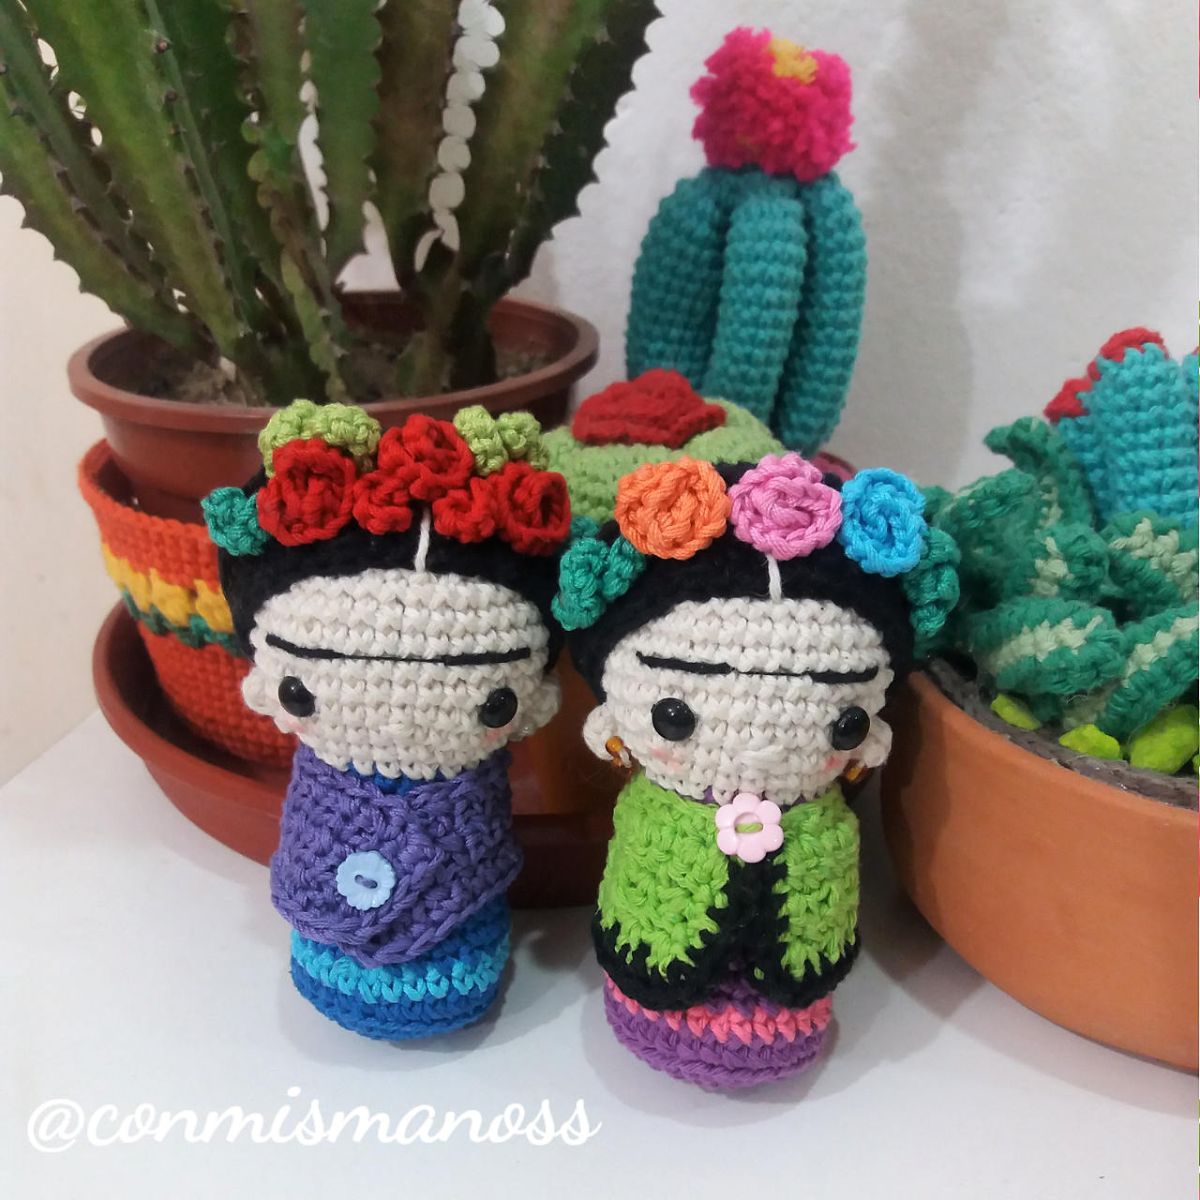 Soft Frida dolls to crochet, perhaps?